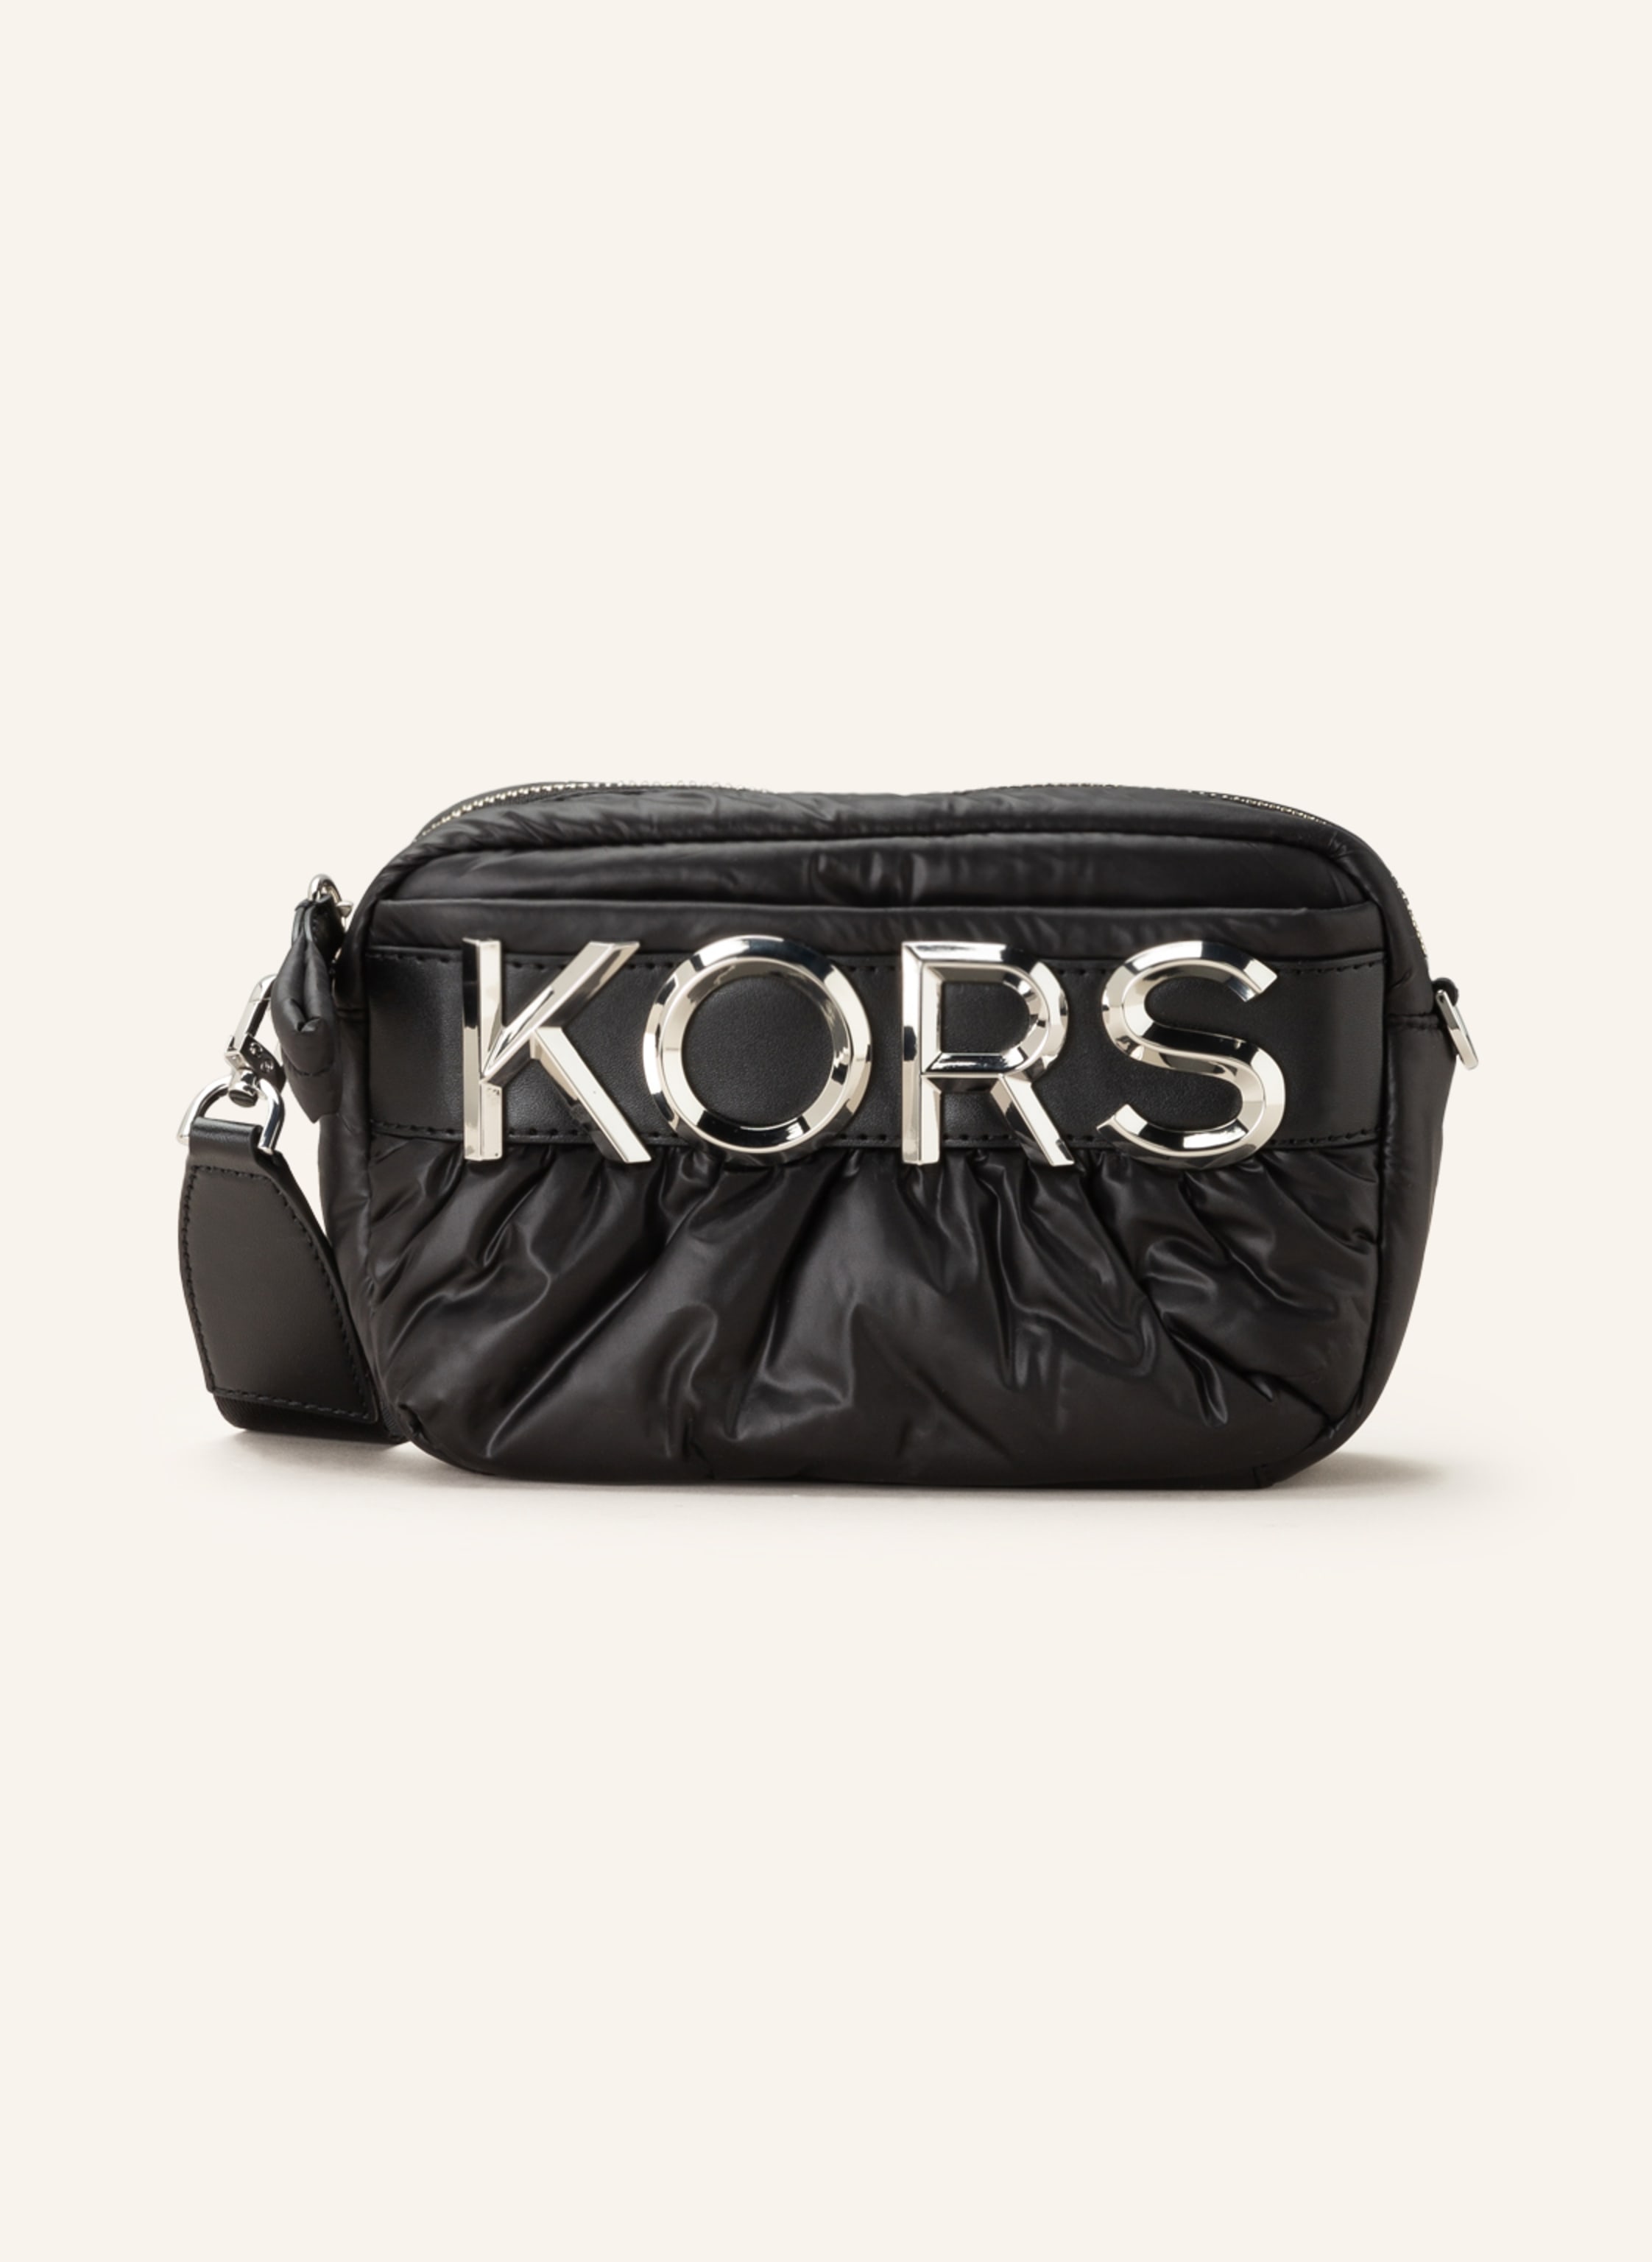 MICHAEL KORS Crossbody bag in 001 black | Breuninger